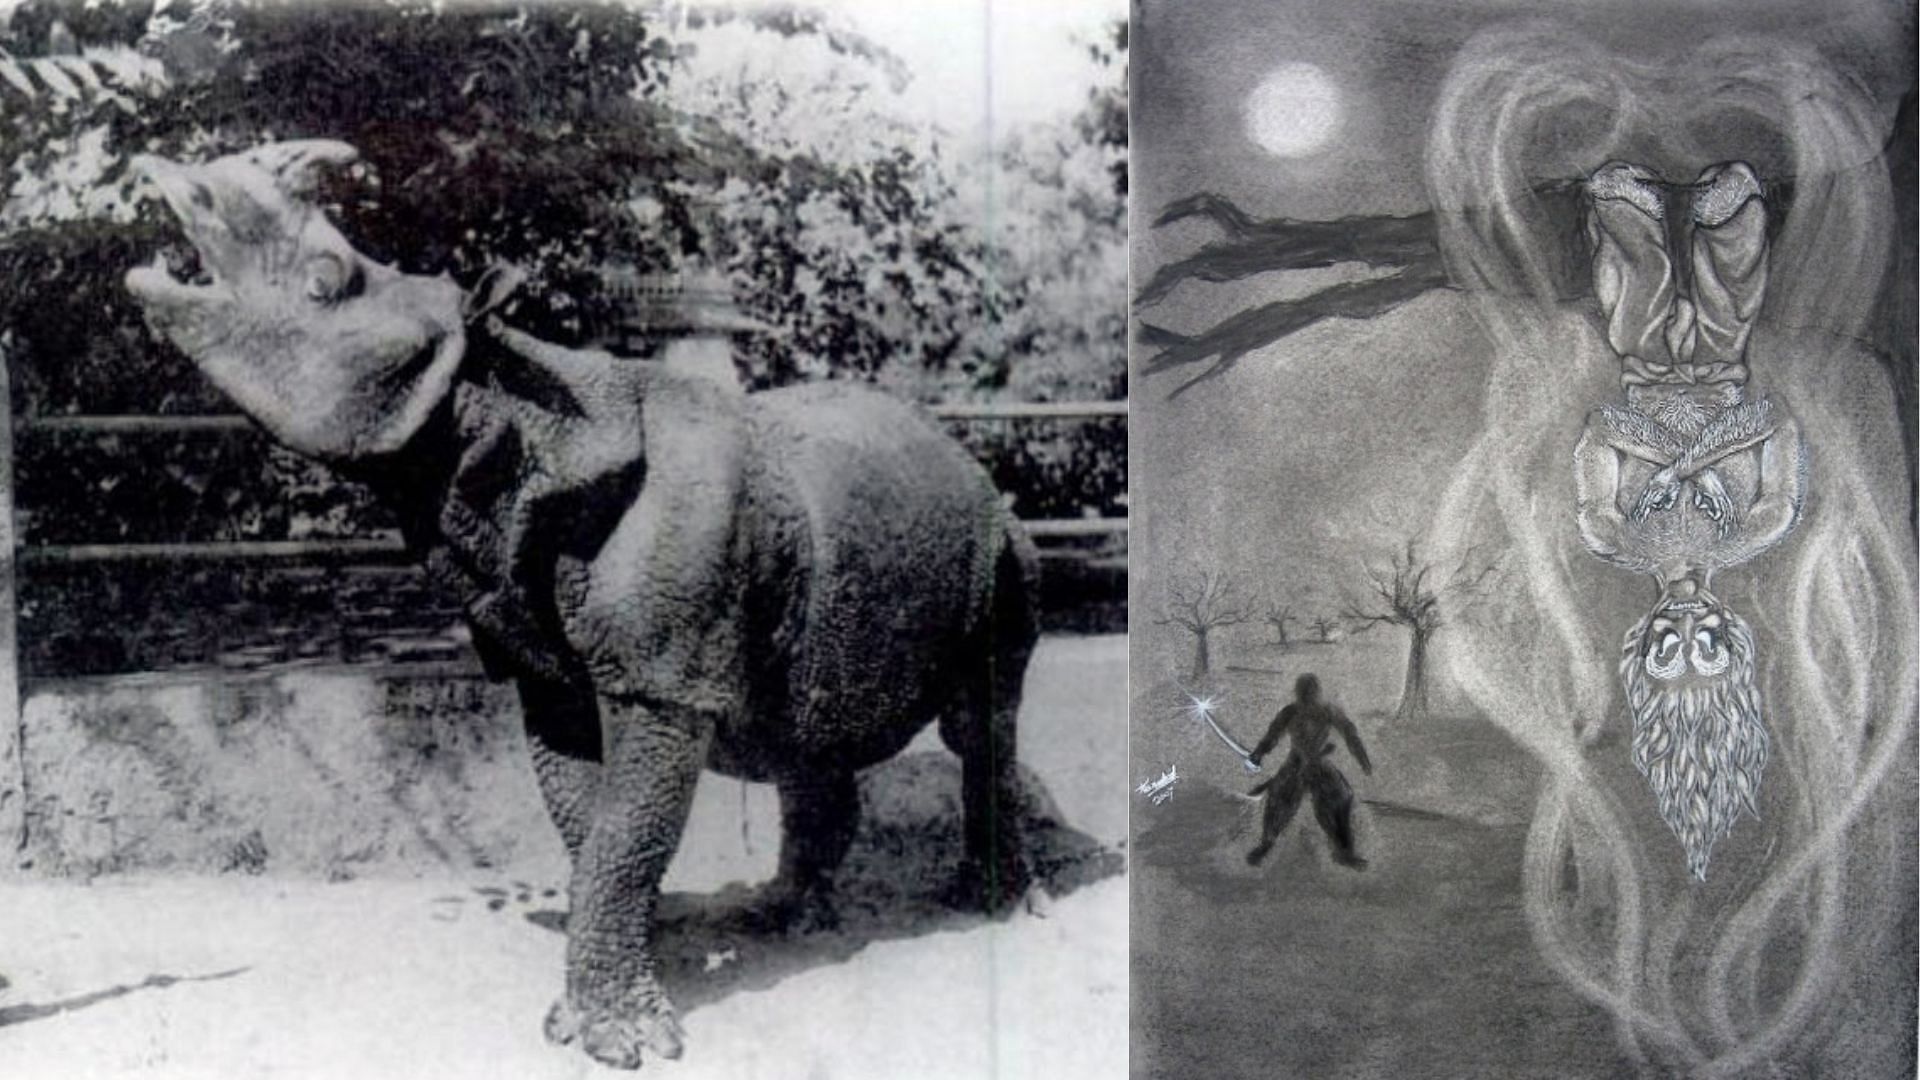 Javan rhino and Vetala from the Indian Folklore (Image via Wikipedia)